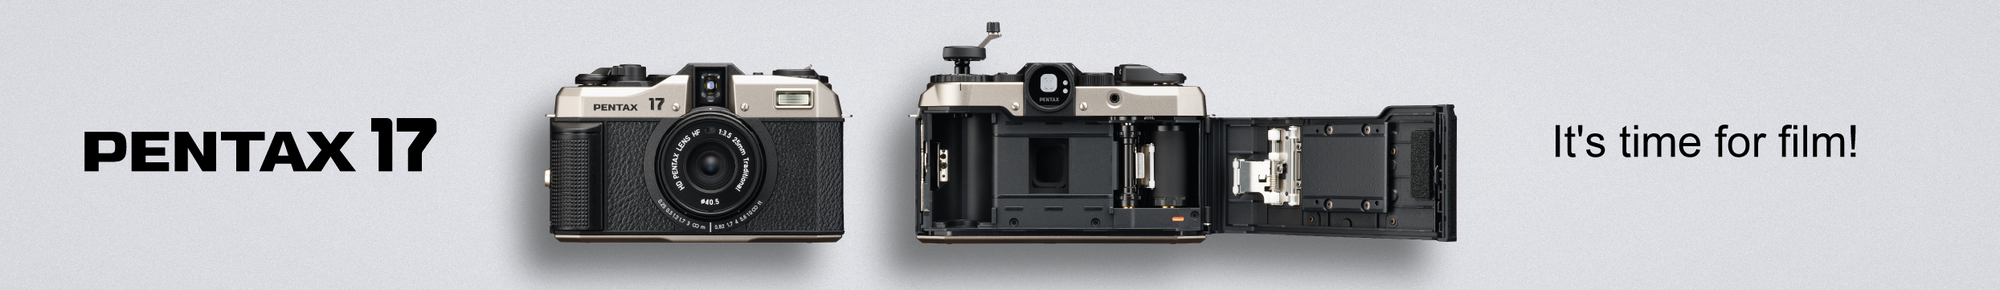 Pentax 17 35mm Half-Frame Camera with 25mm f3.5 Lens